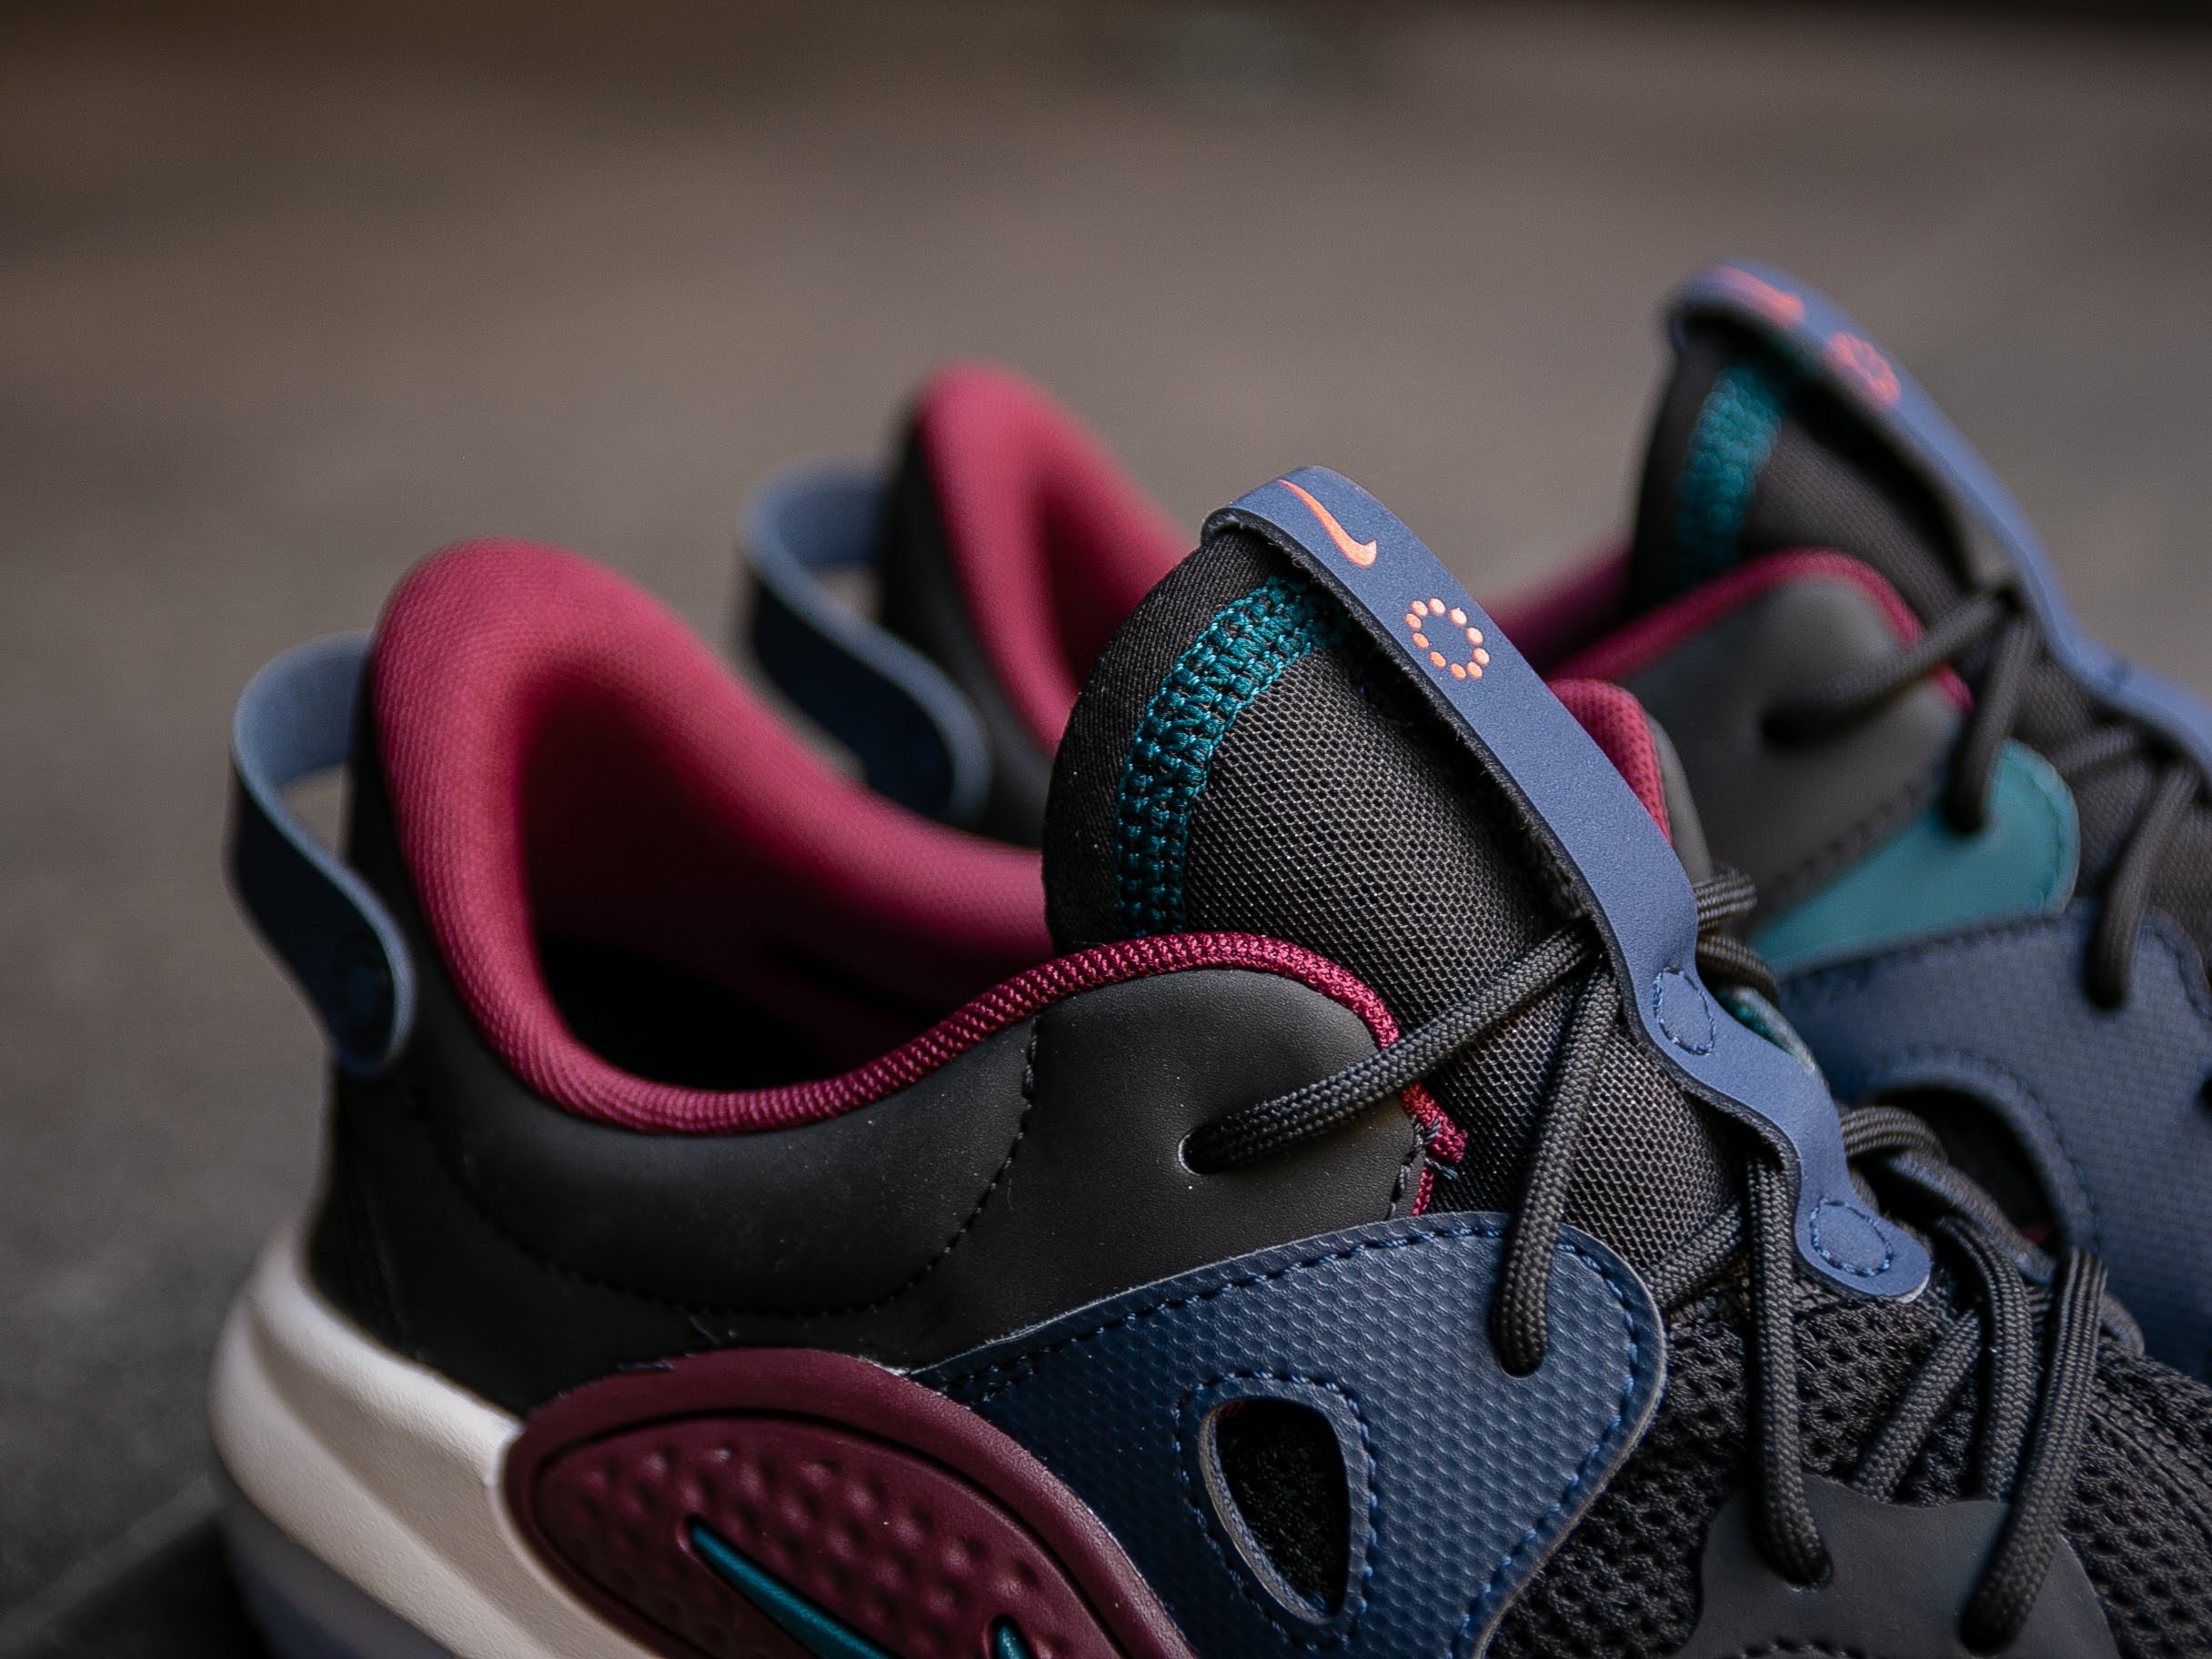 Nike Joyride, amortiguación infinita gracias las microesferas. - The Sneaker Blog